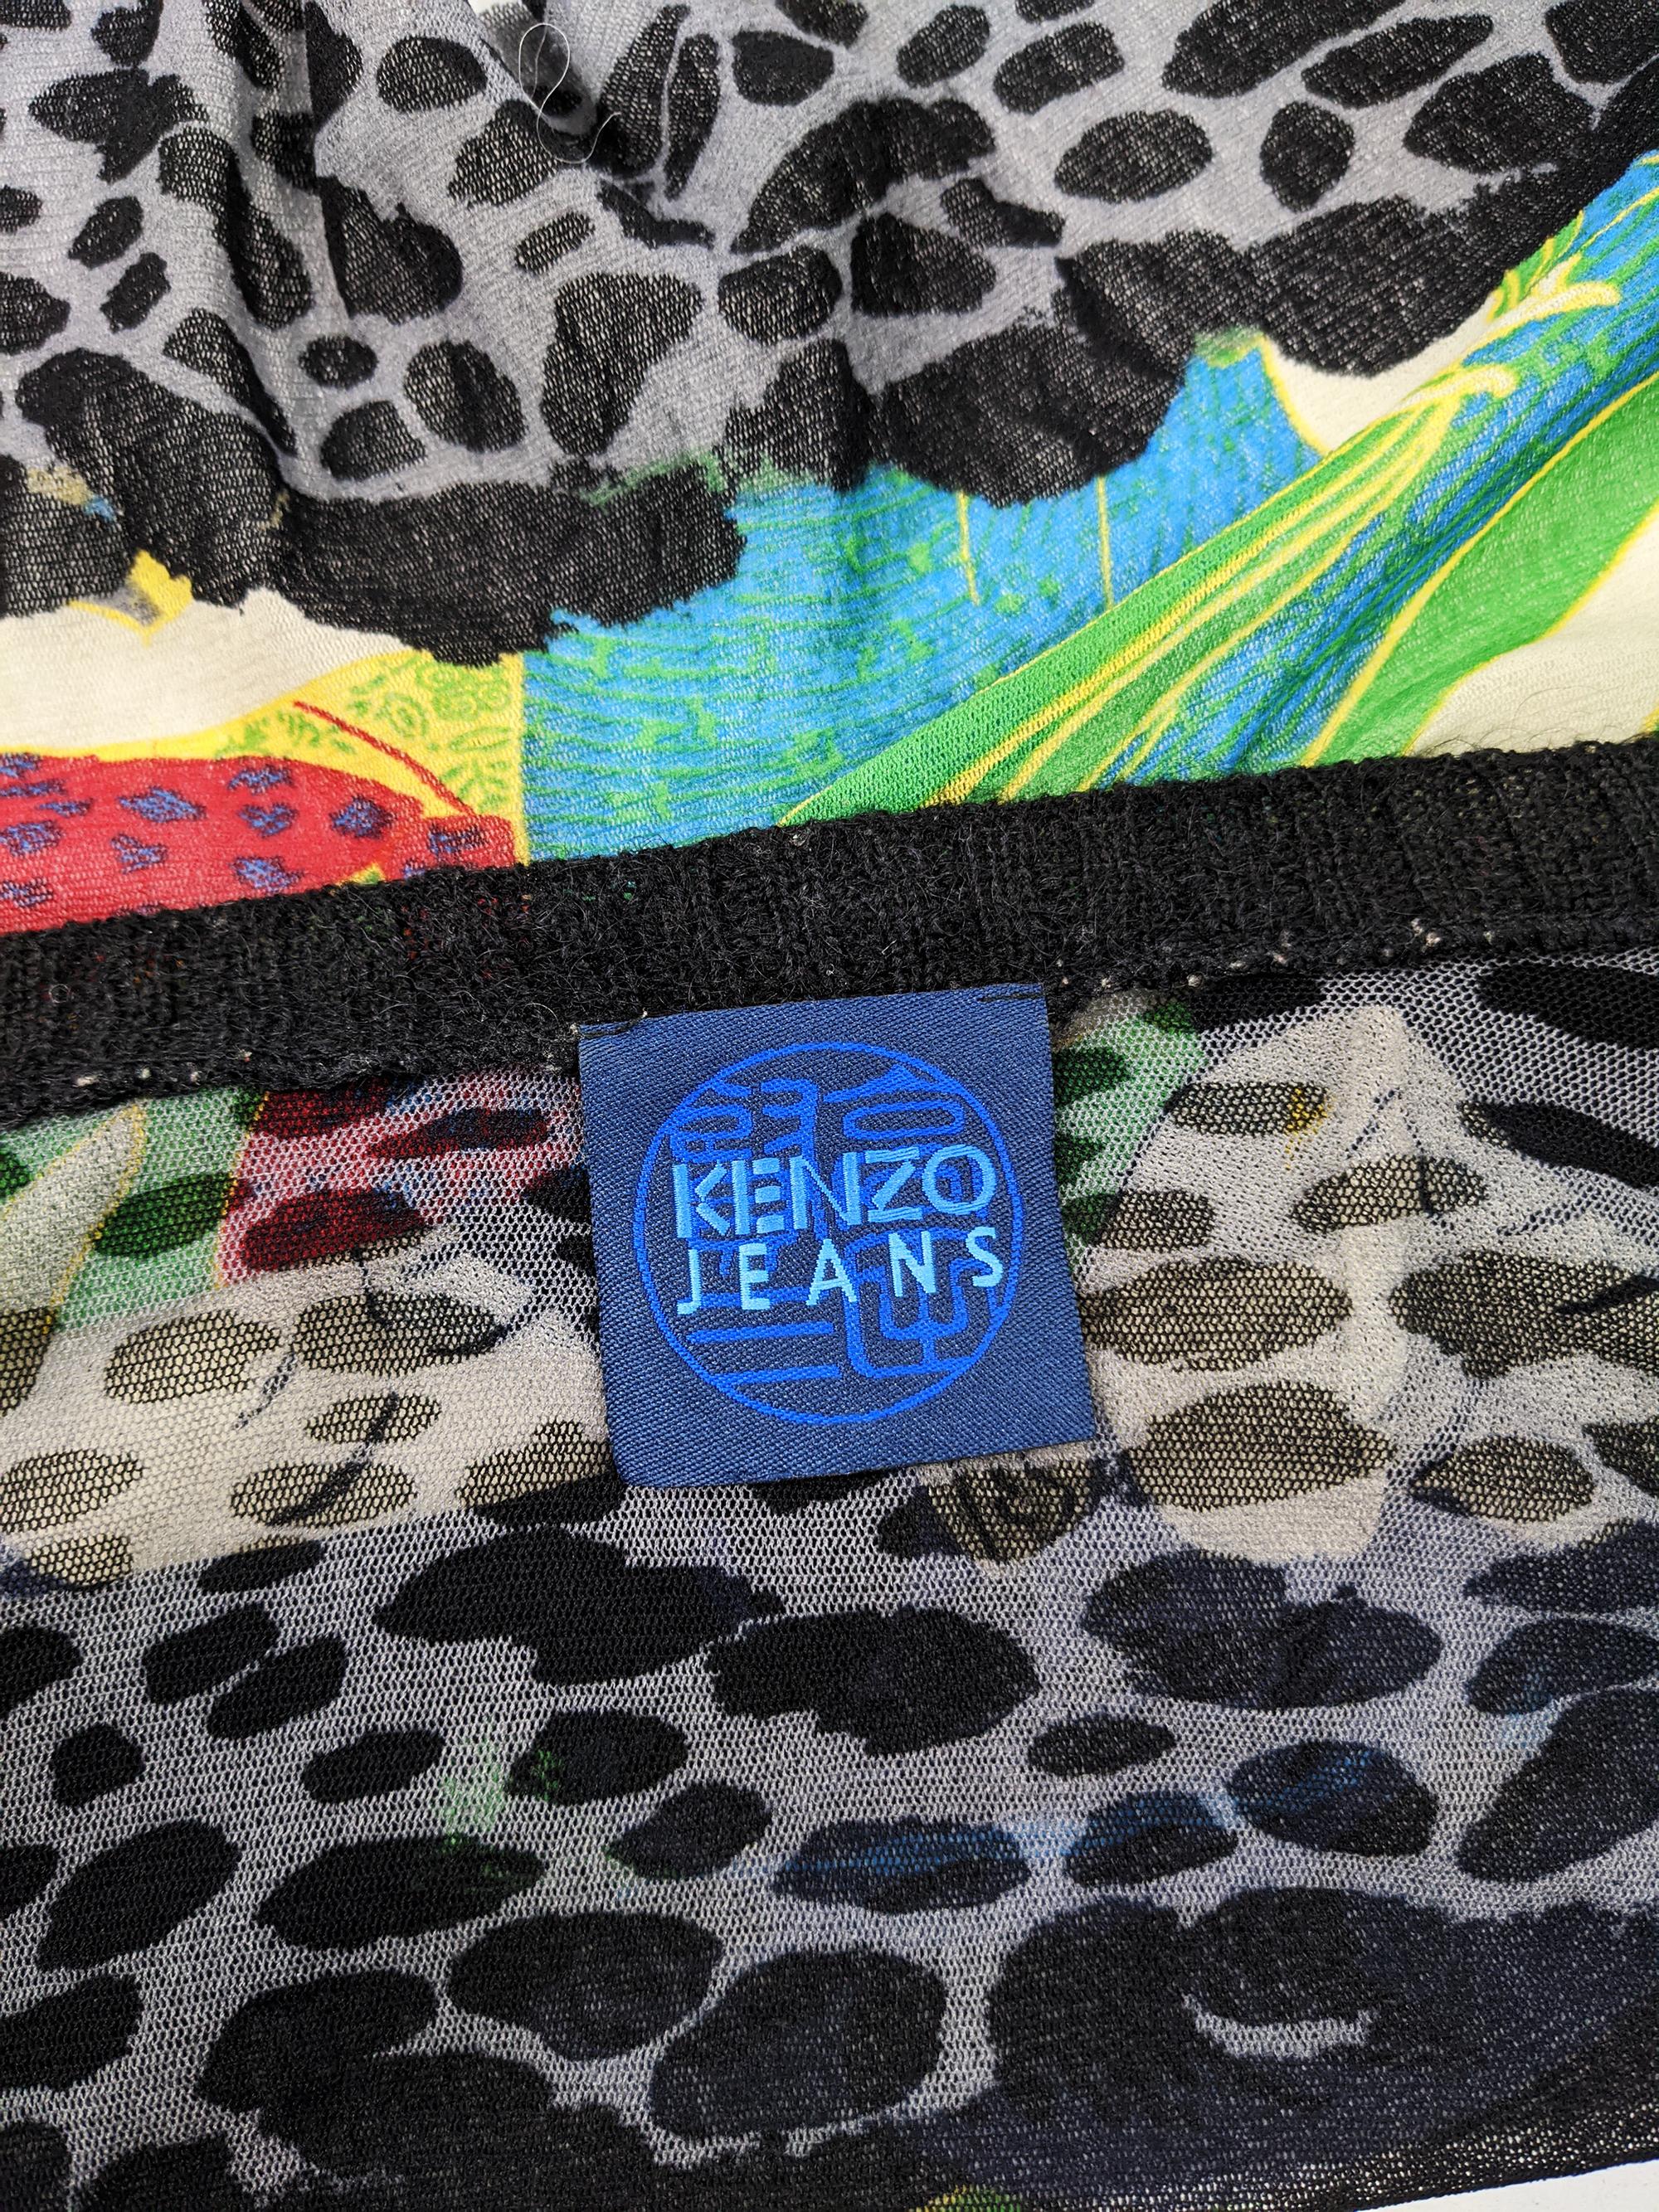 Kenzo Vintage Sheer Mesh Leopard Print Cardigan Sweater 1